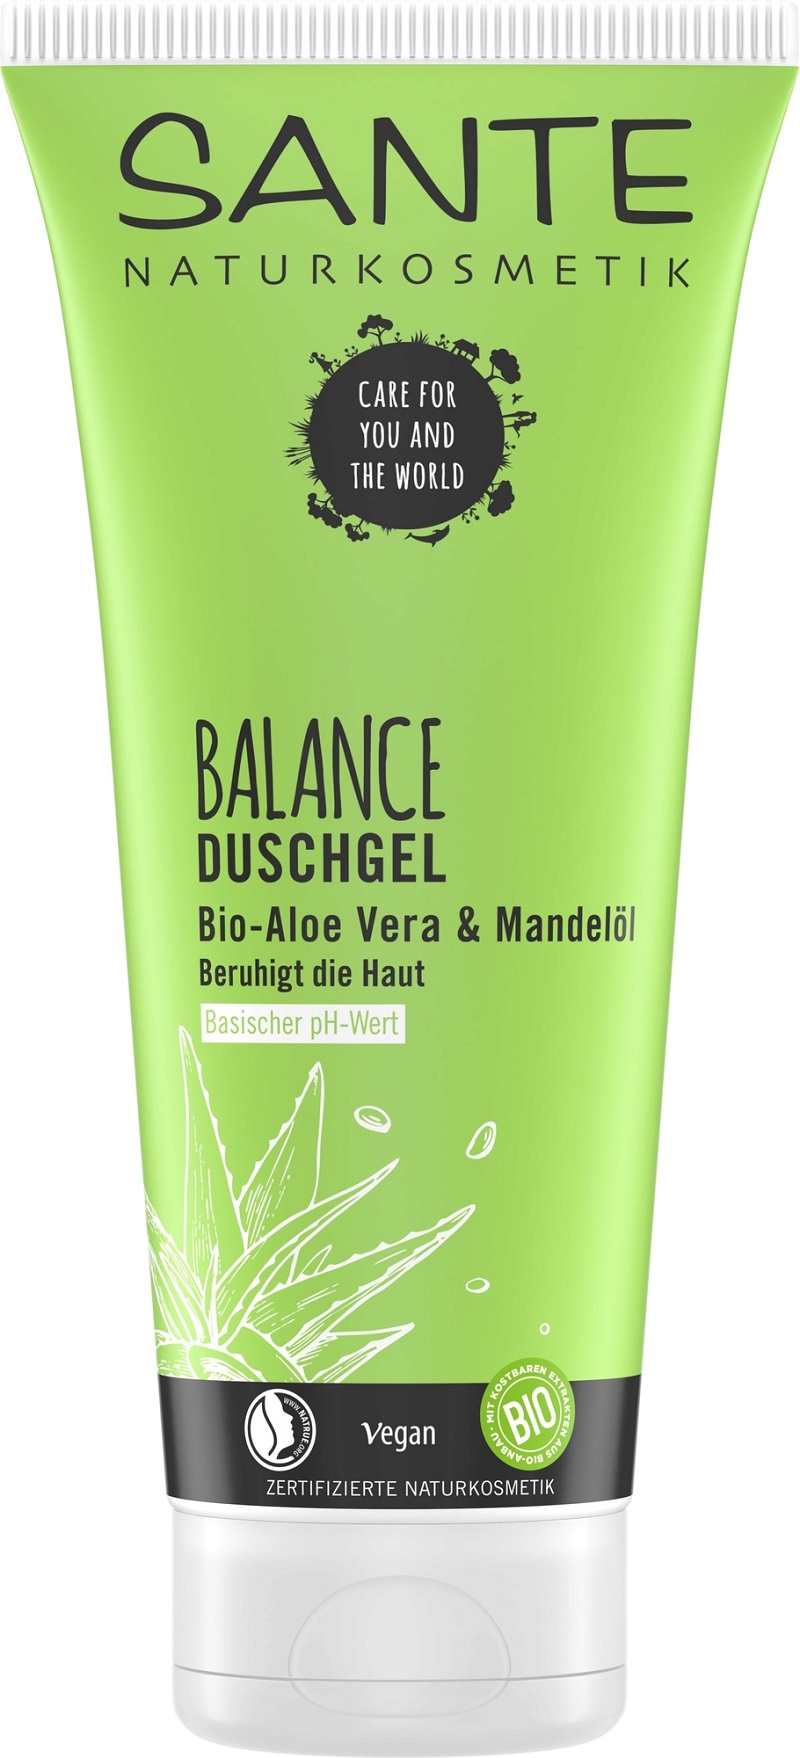 Balance Duschgel Bio-Aloe & Mandelöl von SANTE